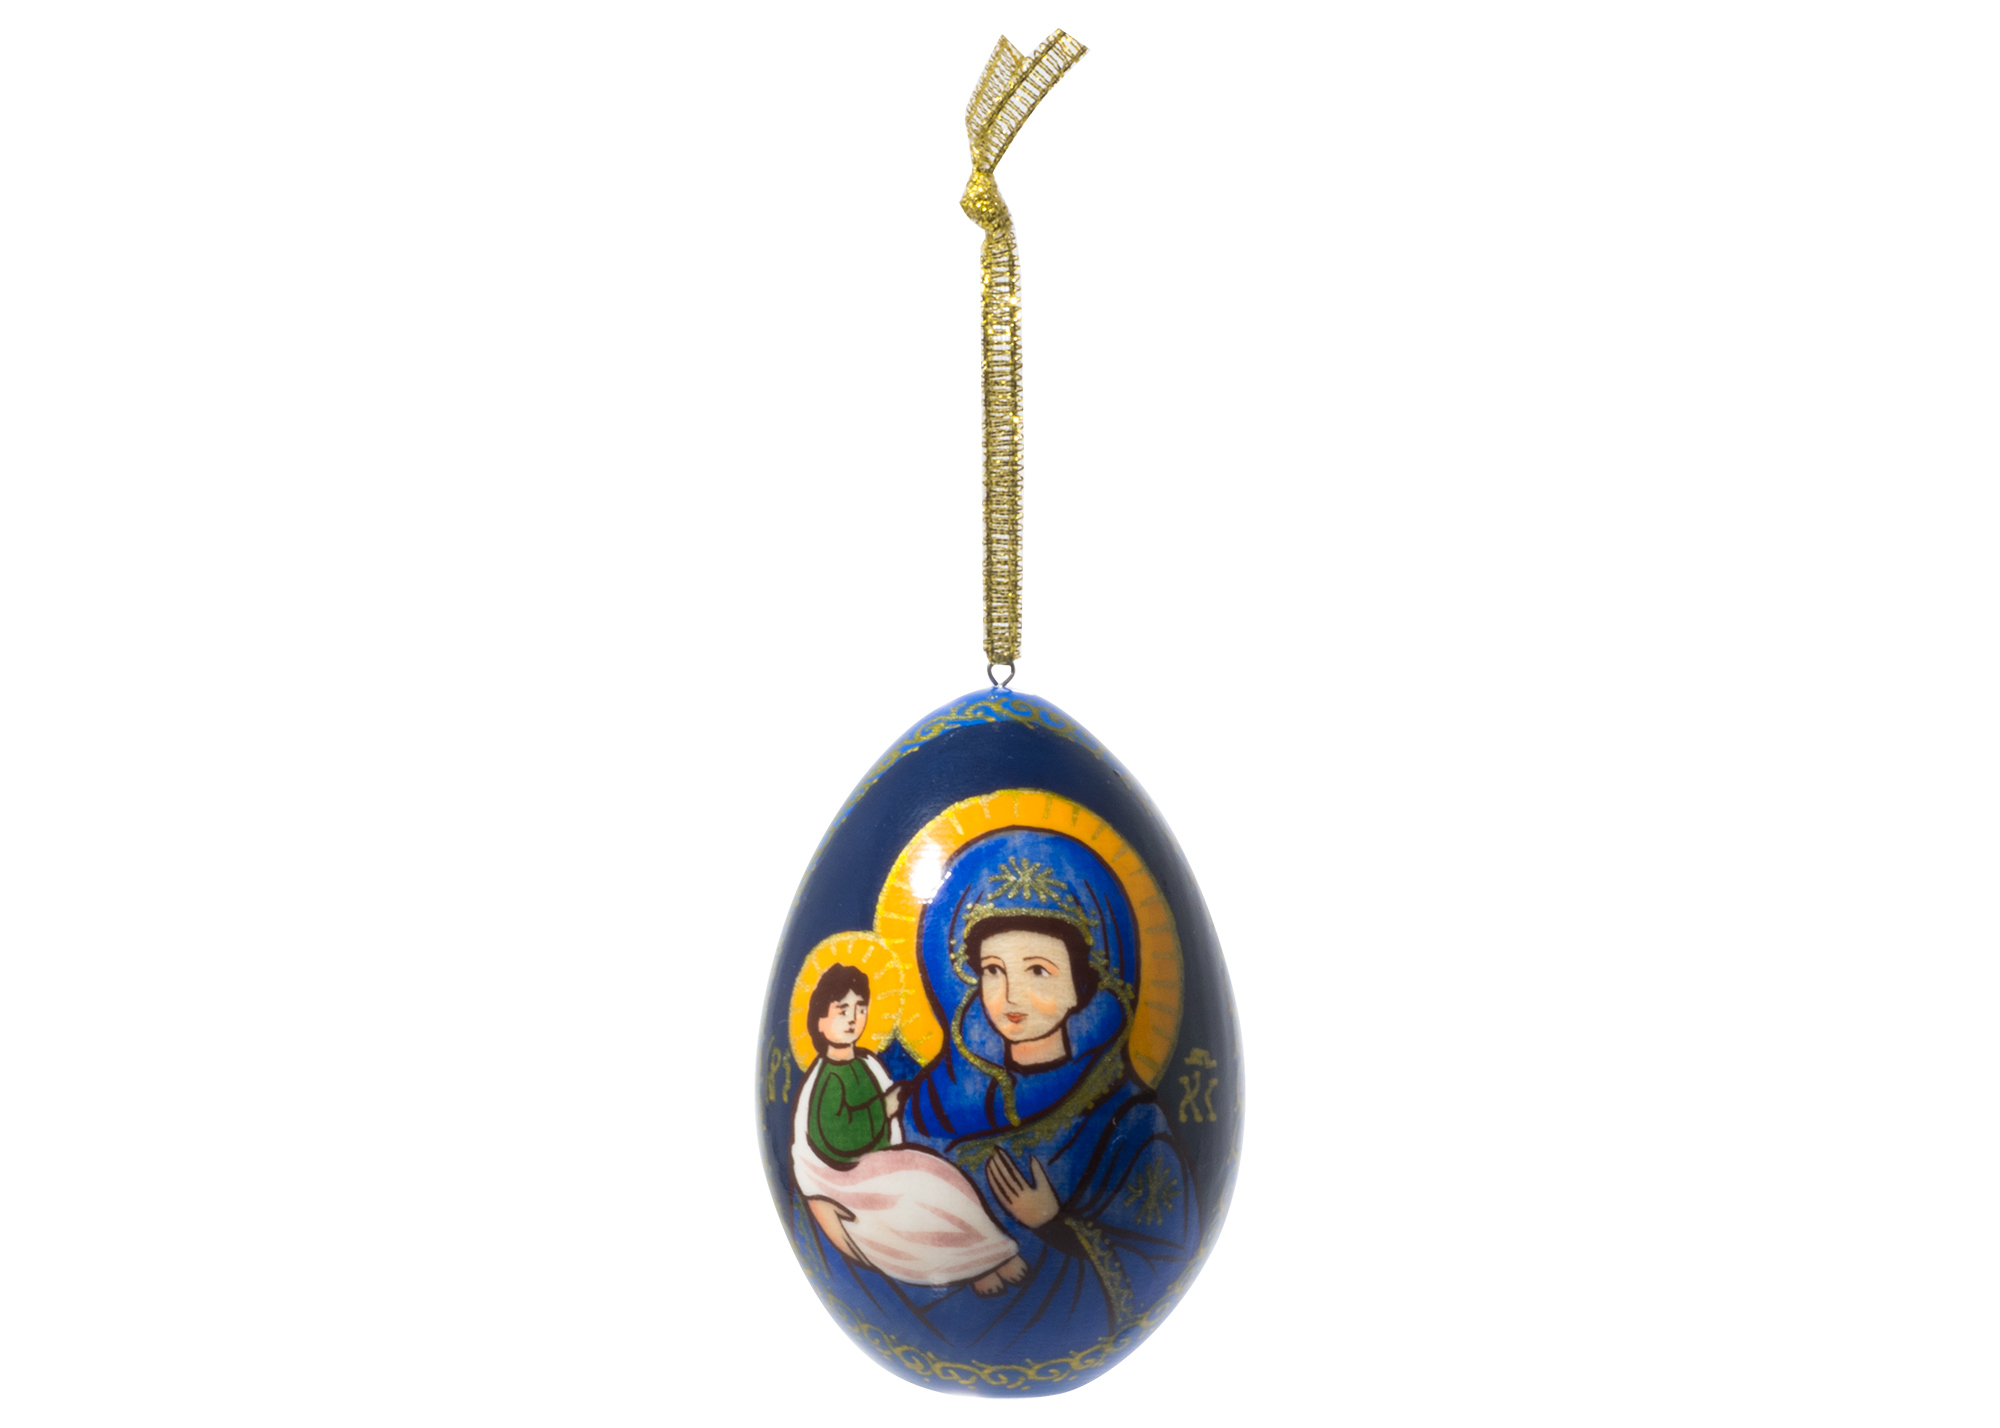 Buy Madonna and Child Ornament 3" at GoldenCockerel.com